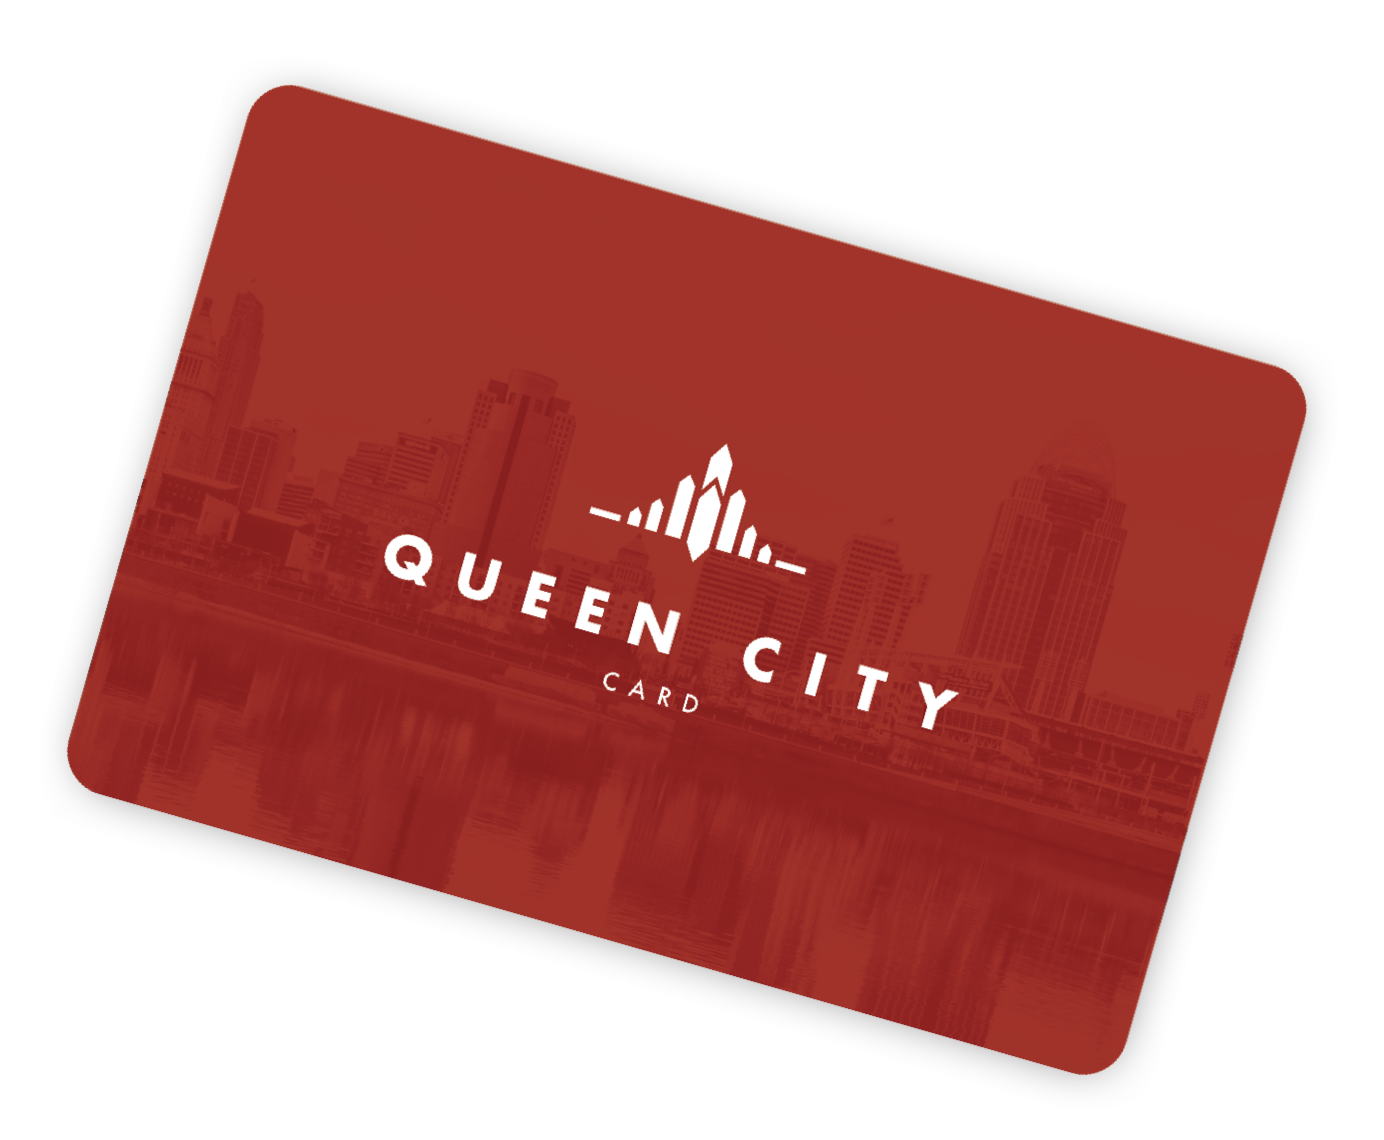 Queen city gift card